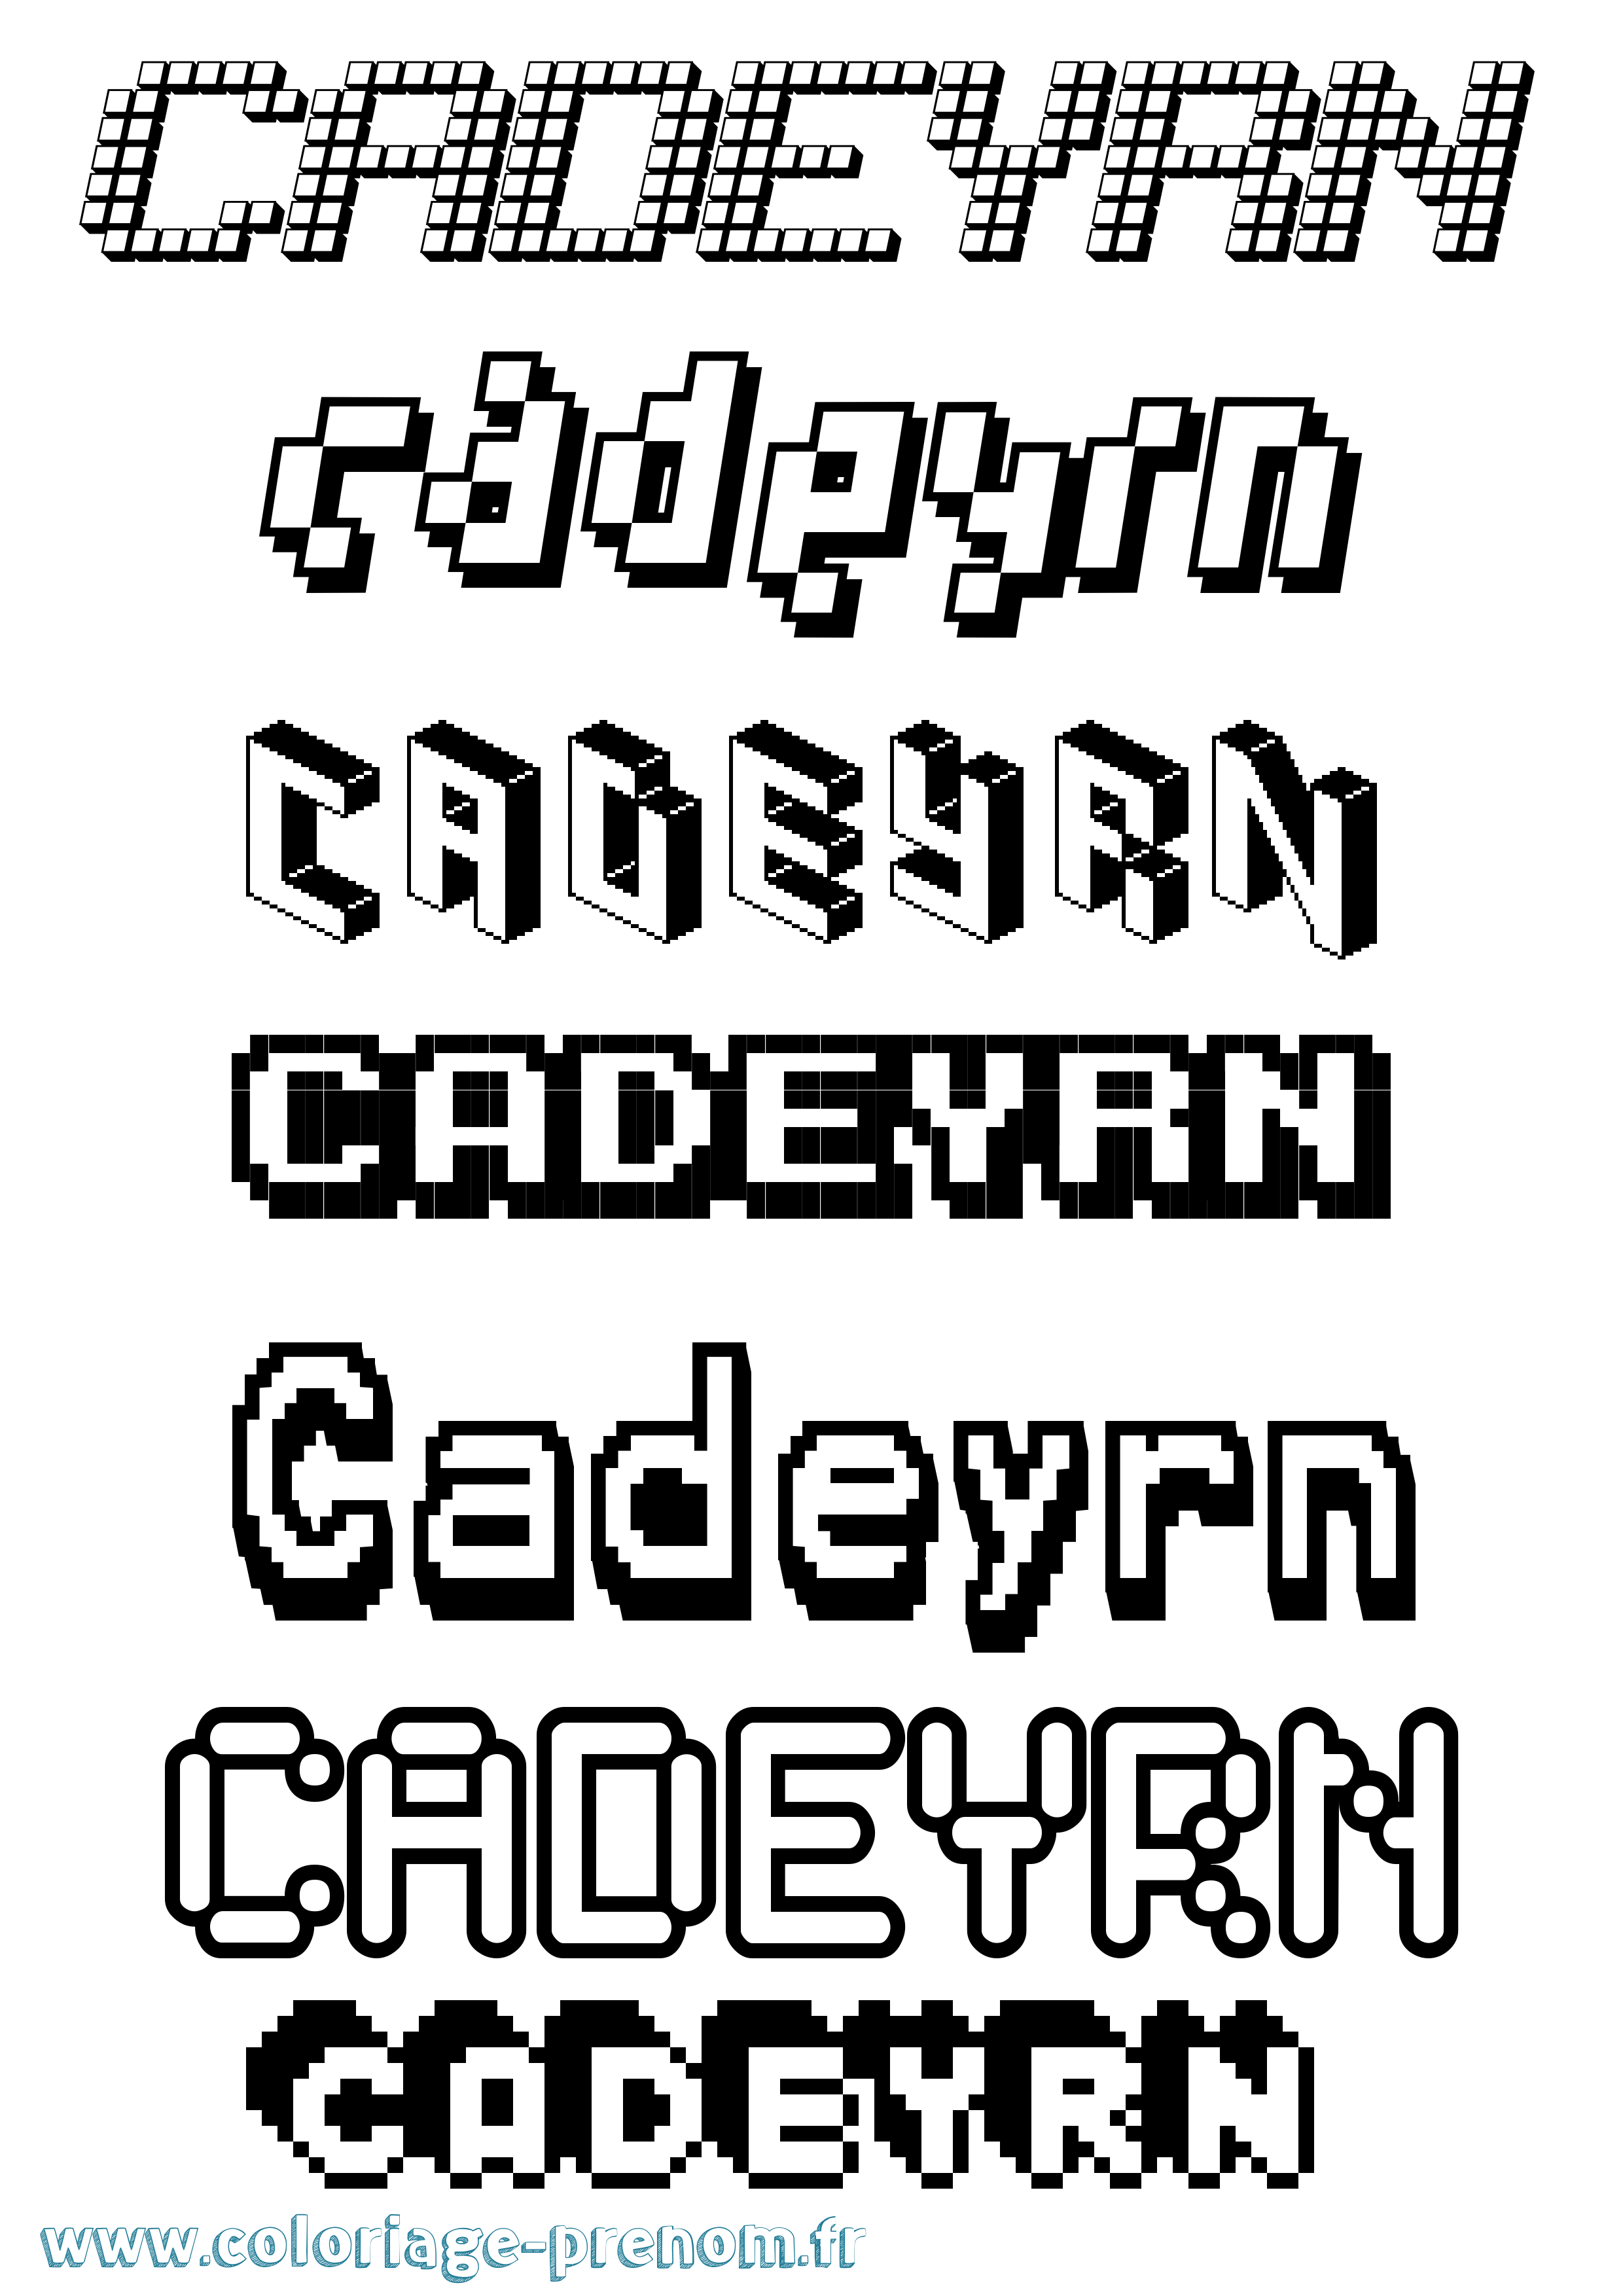 Coloriage prénom Cadeyrn Pixel